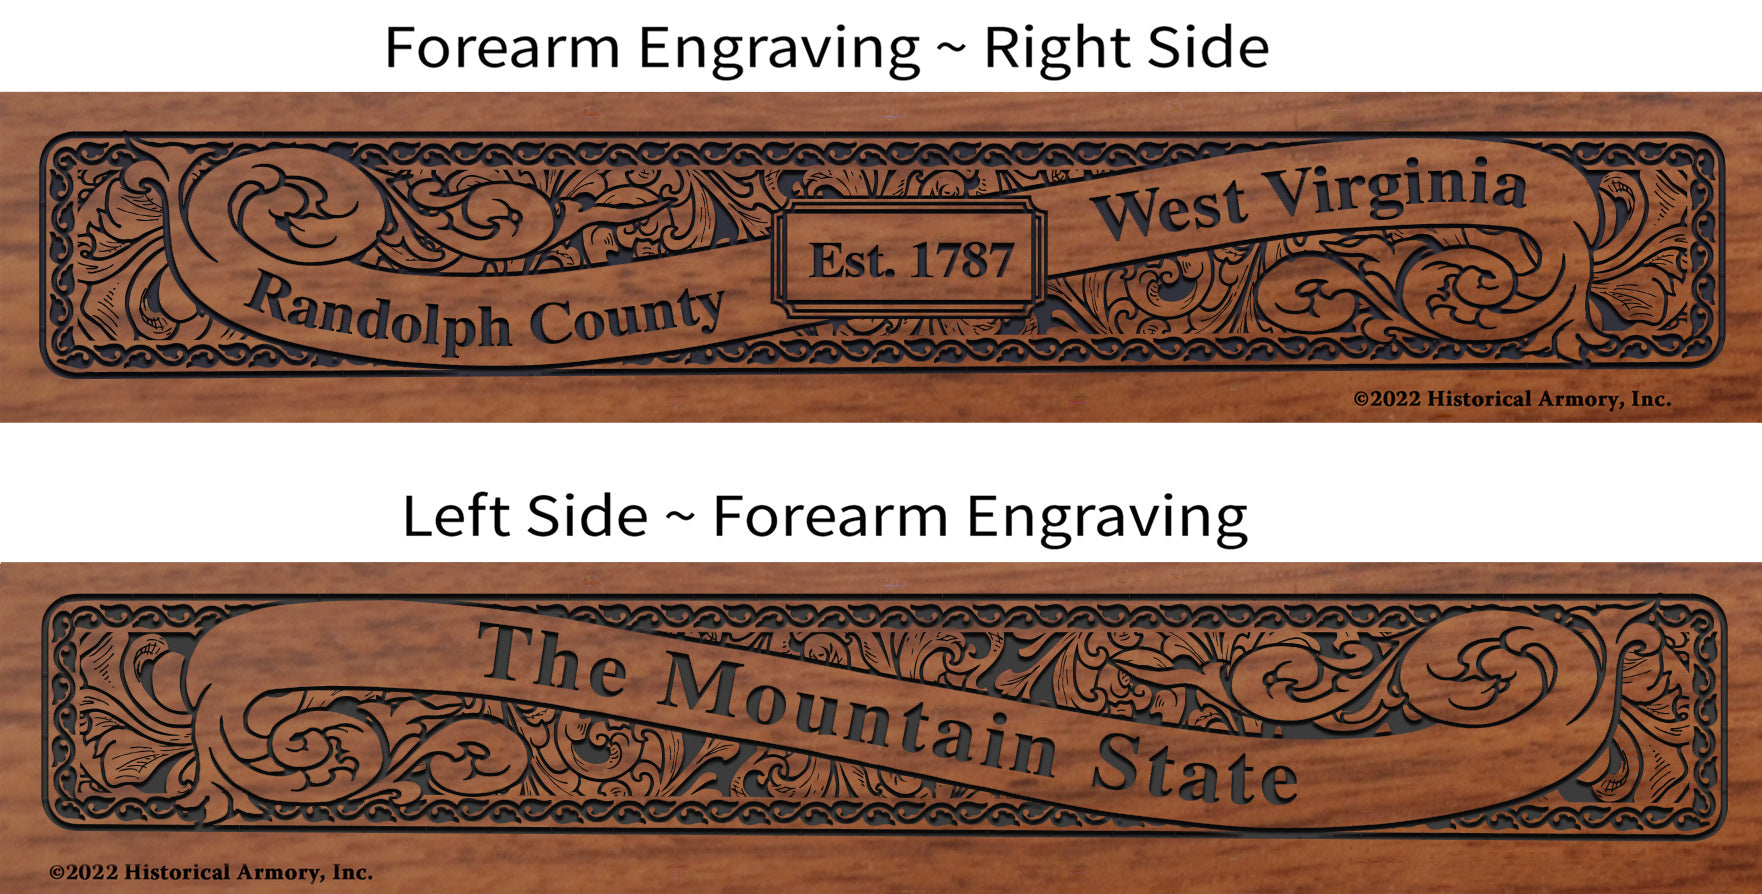 Randolph County West Virginia Engraved Rifle Forearm